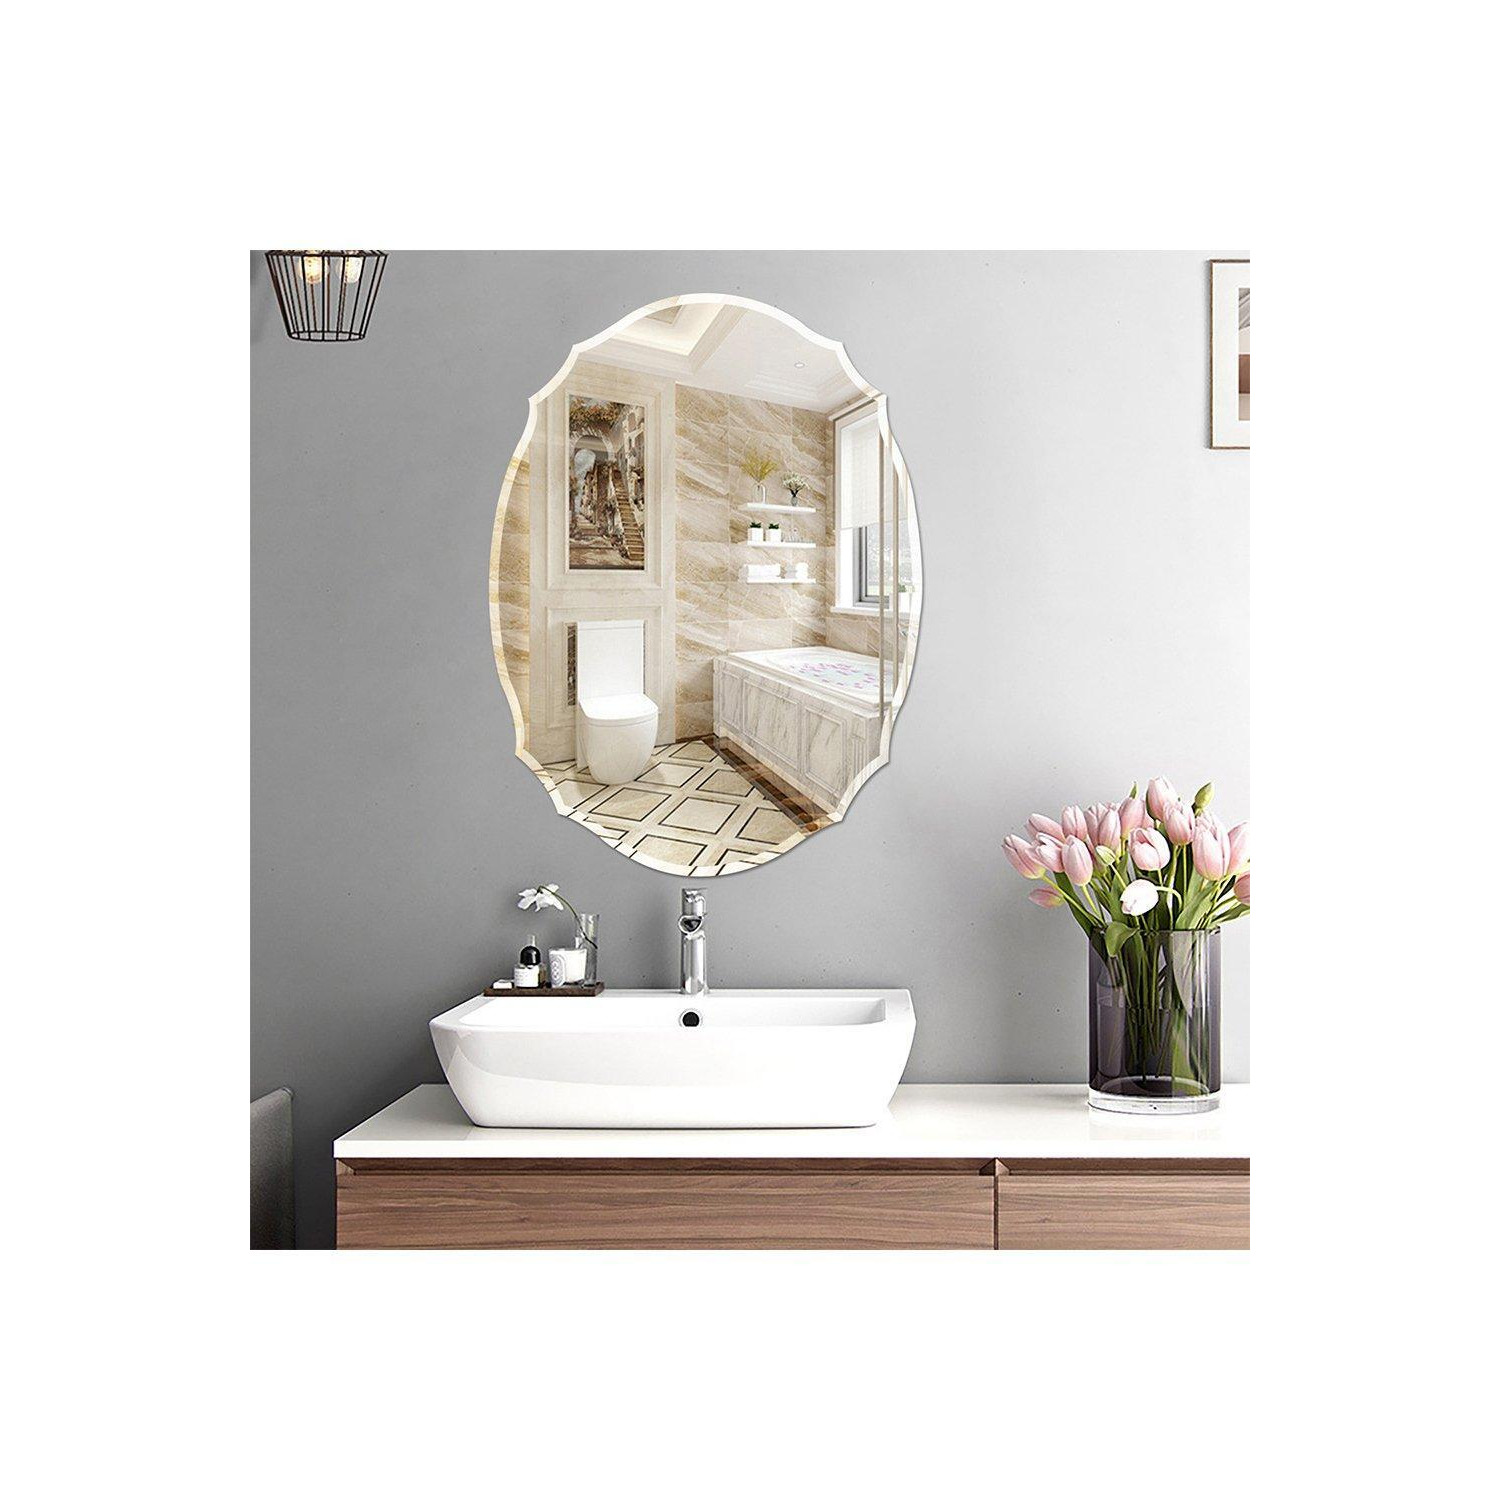 40cm W x 60cm H Modern Beveled Edge Frameless Special-Shaped Wall Mirror - image 1